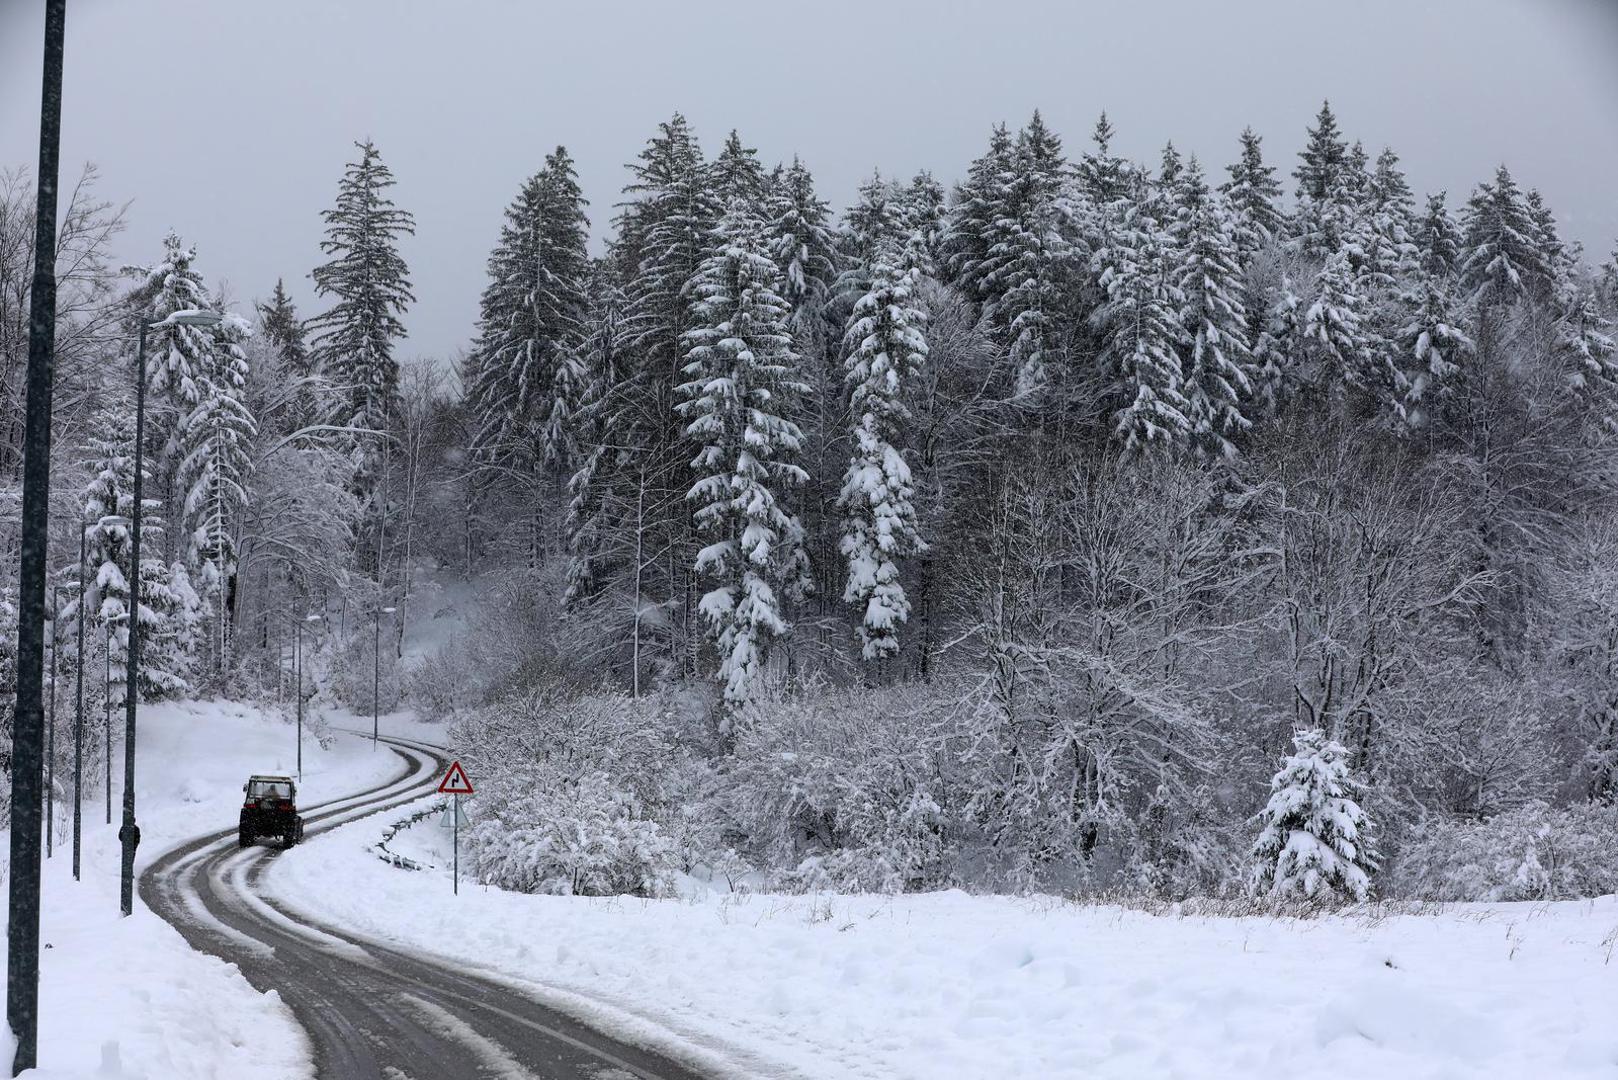 Zbog snježnih nanosa za sav promet zatvorena je državna cesta DC547 Sveti Rok-Mali Alan.

